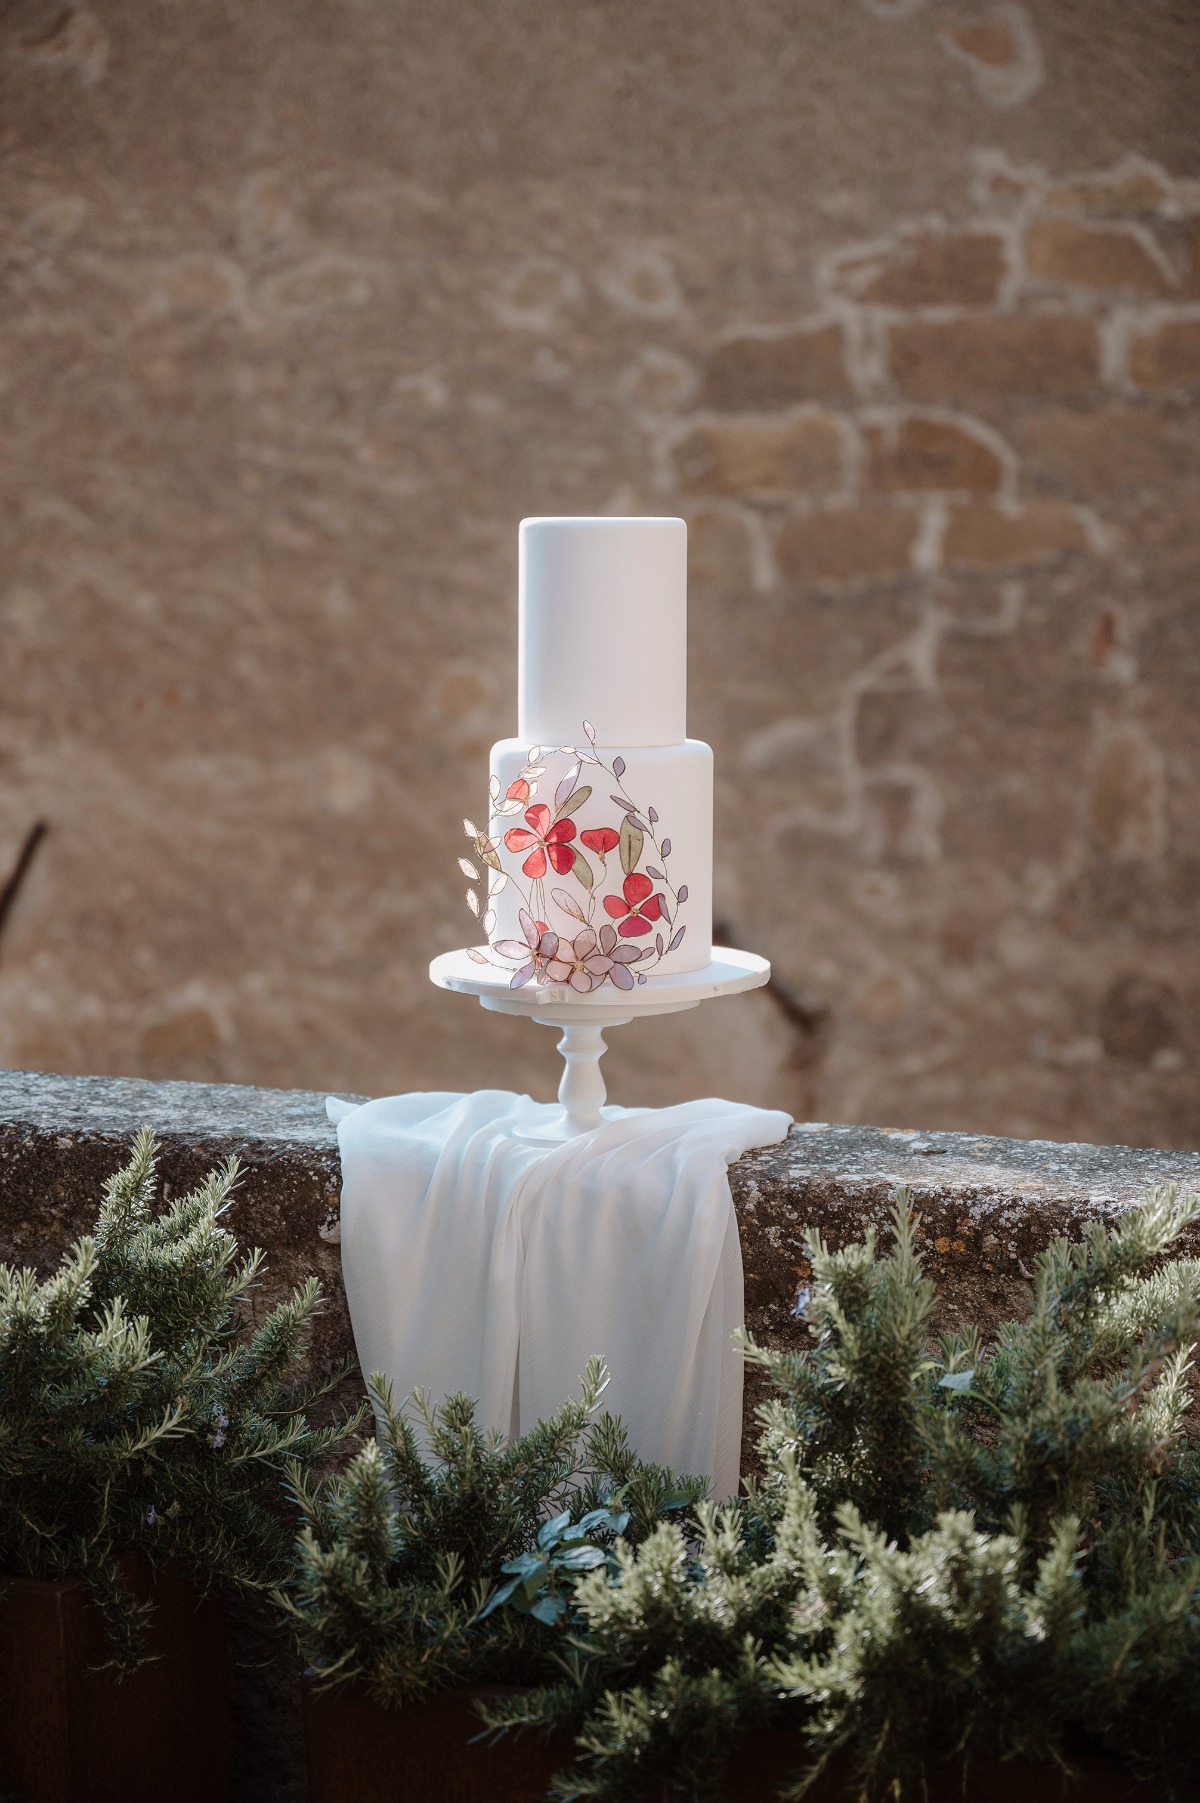 White wedding cake with handmade floral design